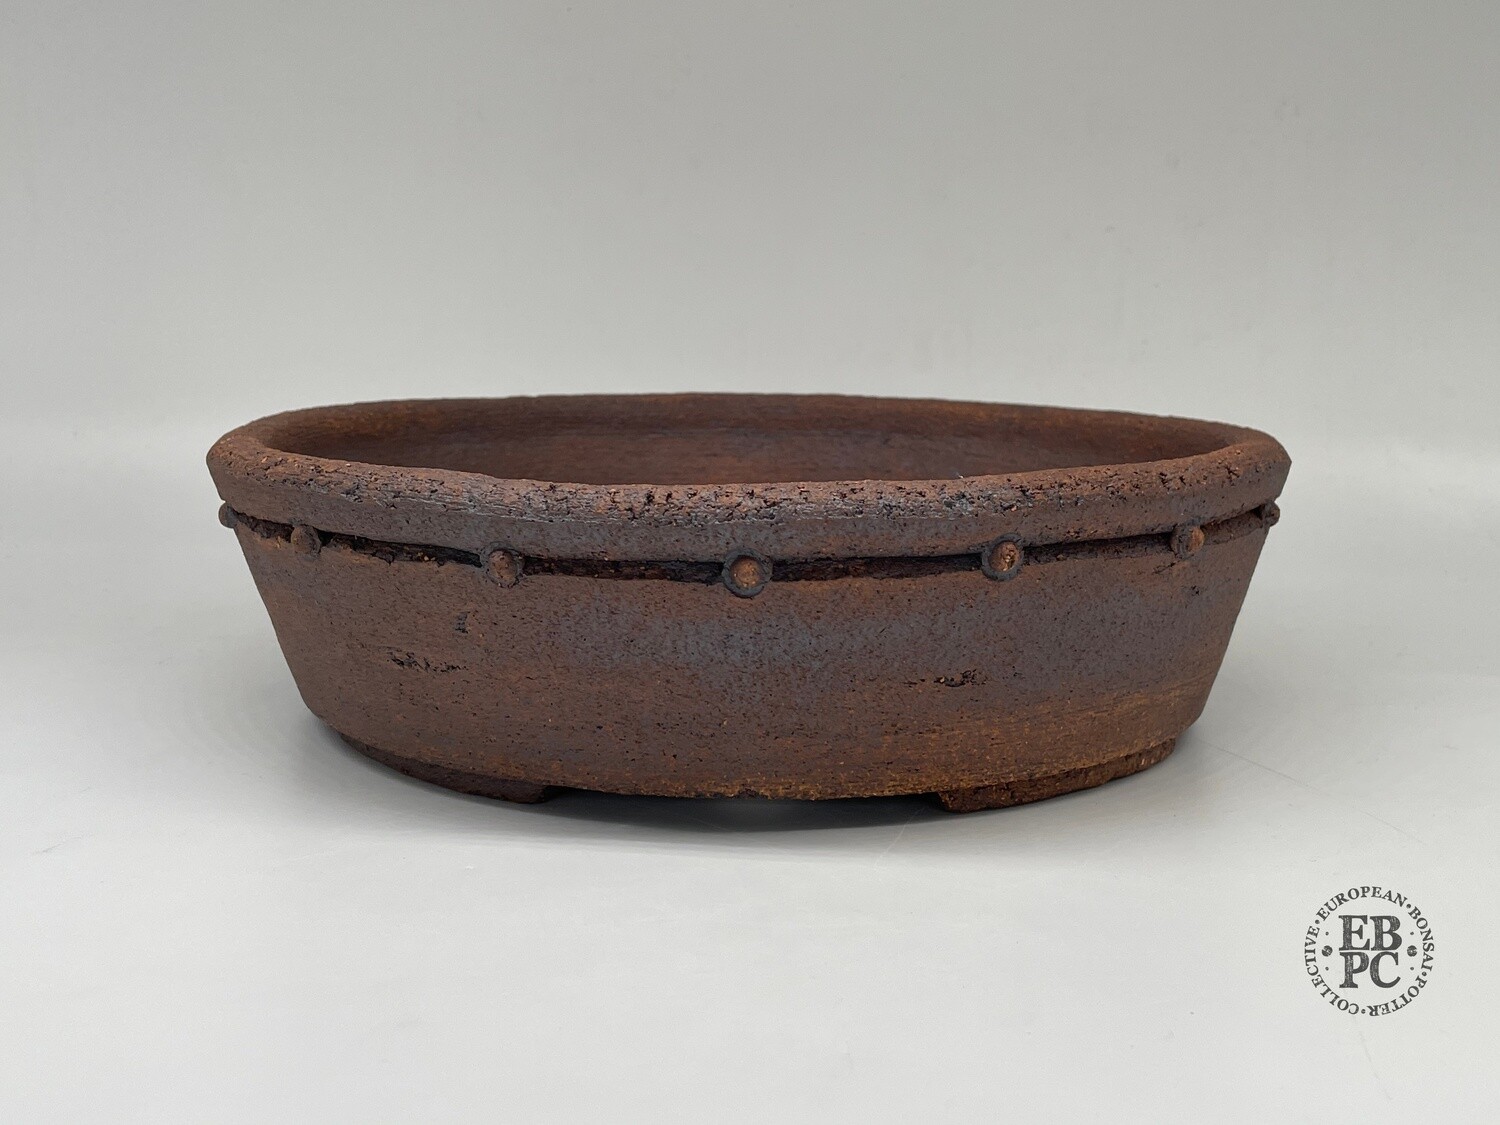 Dragonfly Bonsai Pots. 28.9cm; Unglazed; Round; Inset-Studded; Drum/Nanban Design; Warm Browns; Caramel tones; Natural Textures; Aged finish